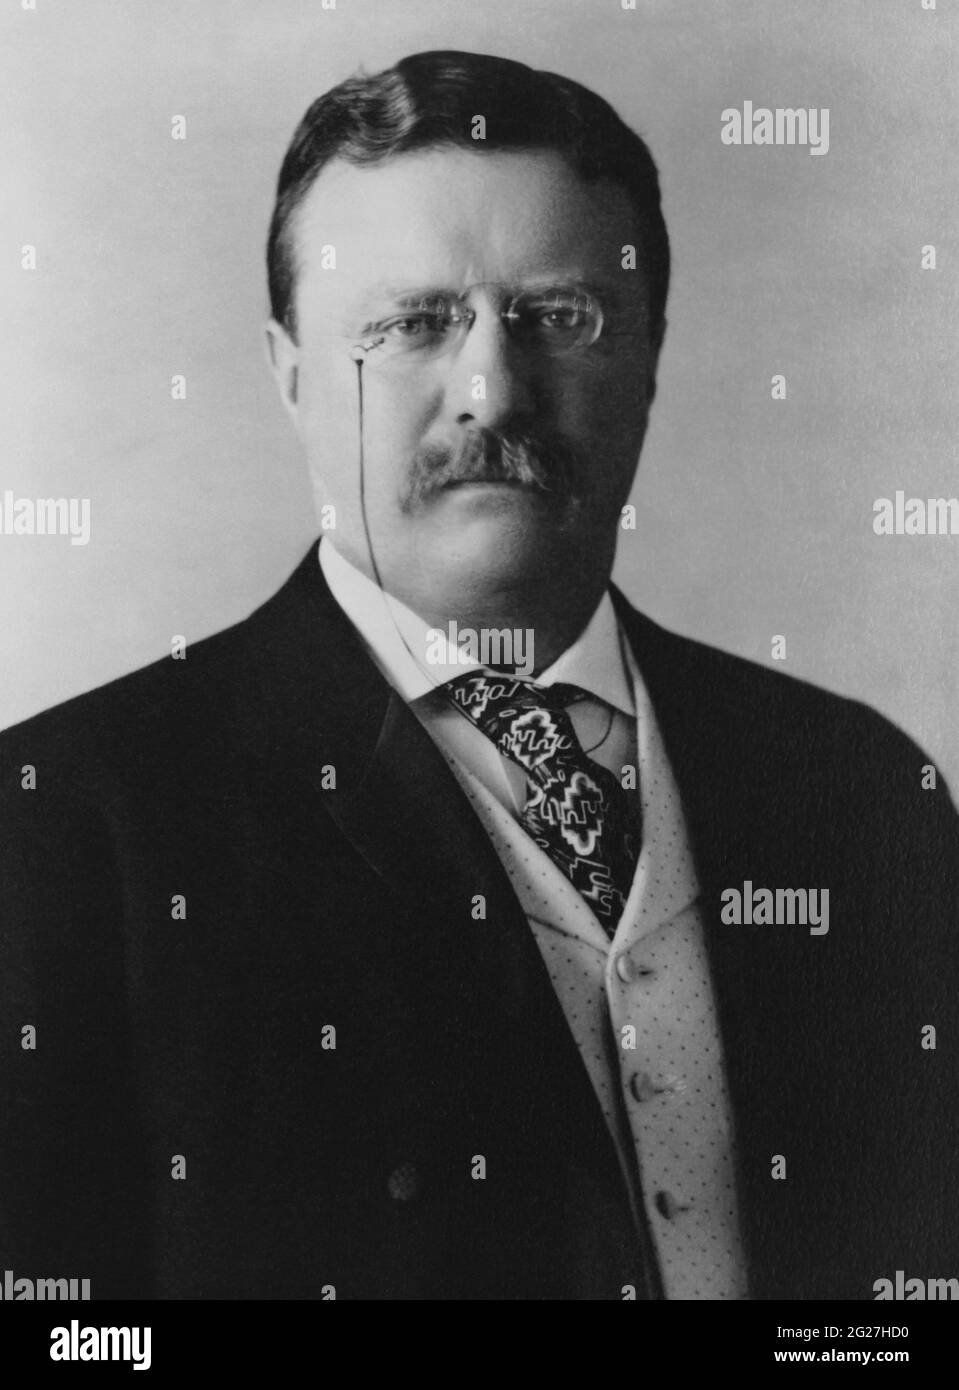 Portrait of Theodore Roosevelt, 26th U.S. President. Stock Photo